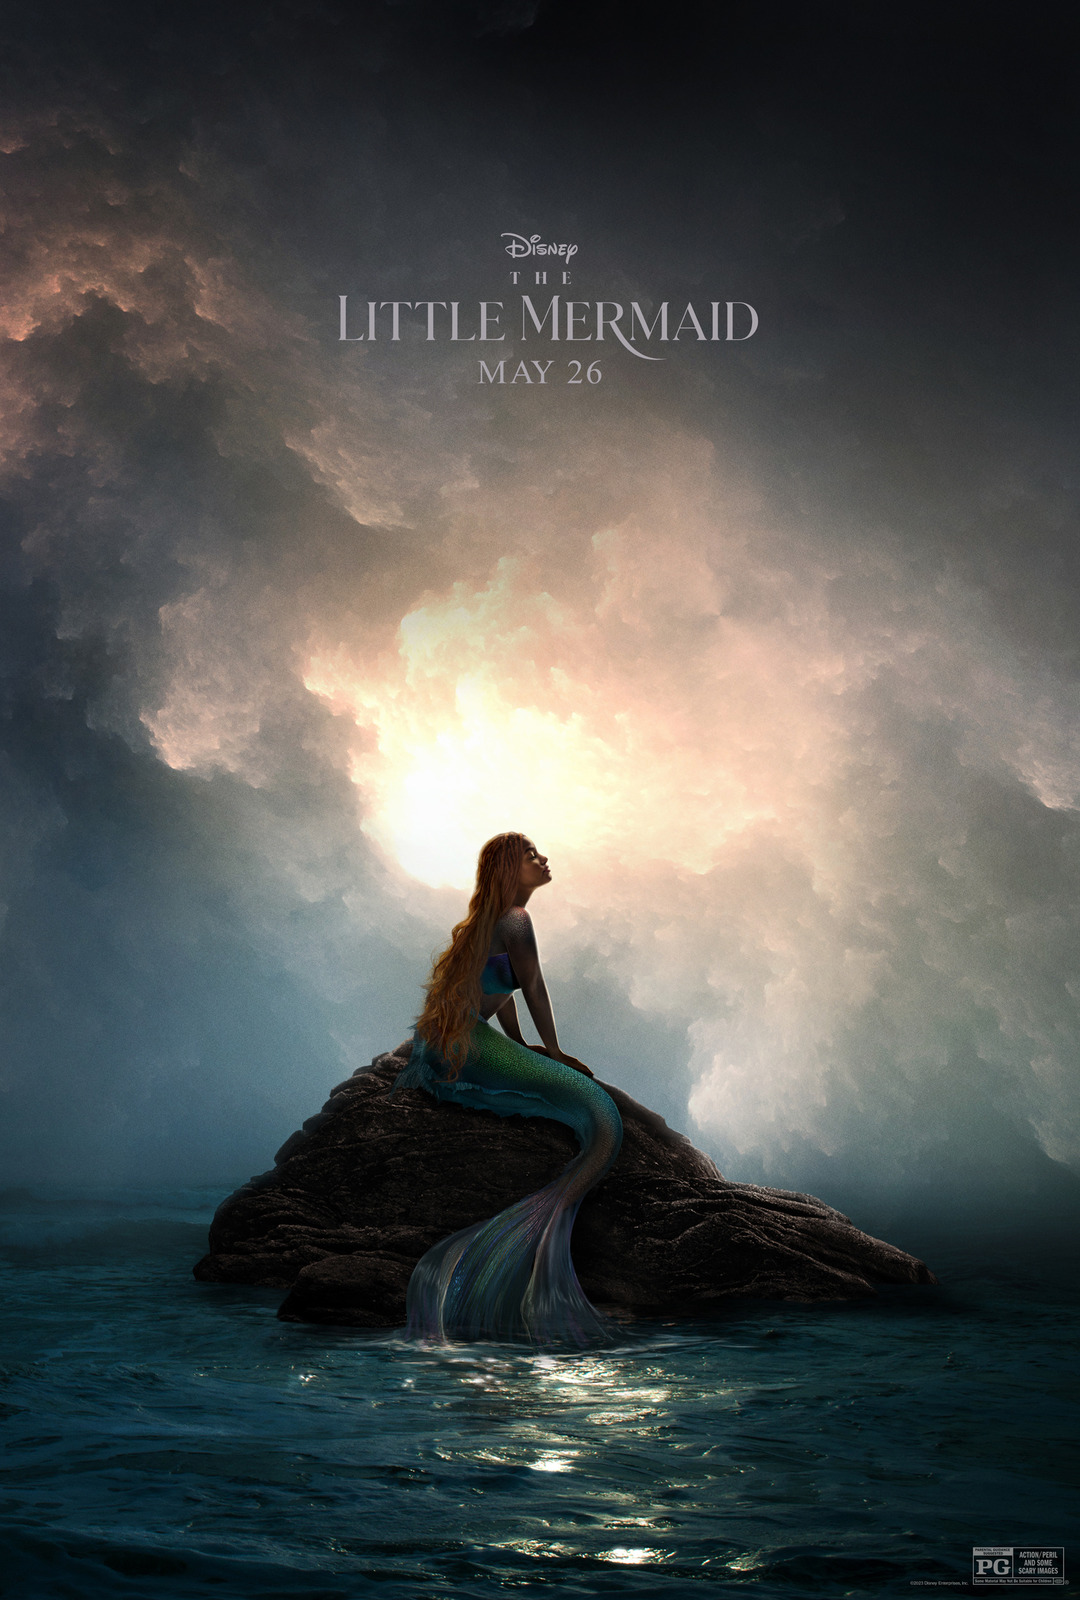 The Little Mermaid Movie Poster Rob Marshall Art Film Print 11x17 - 32x48" #3 - $11.90 - $25.90